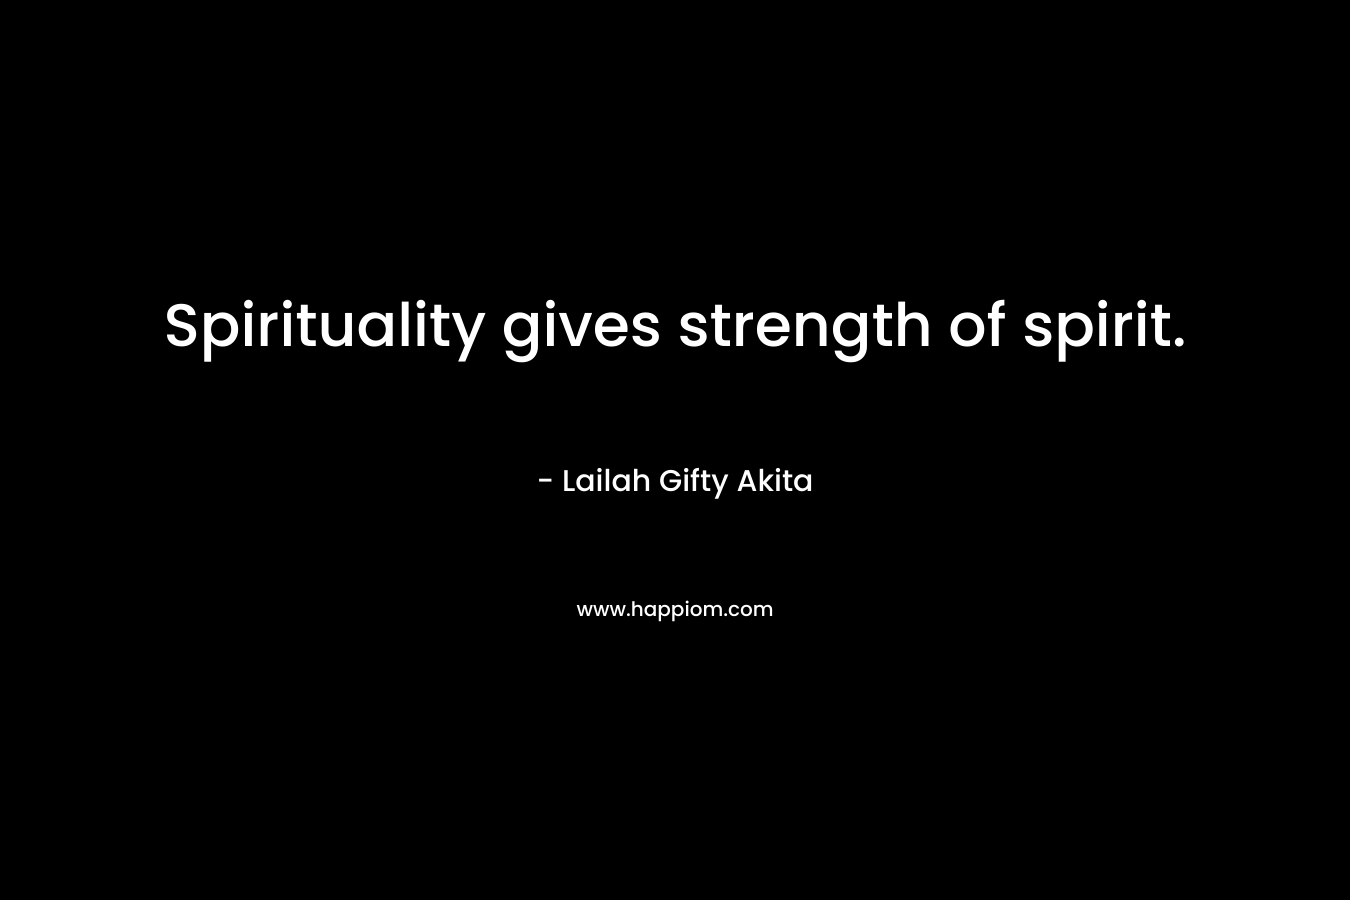 Spirituality gives strength of spirit.